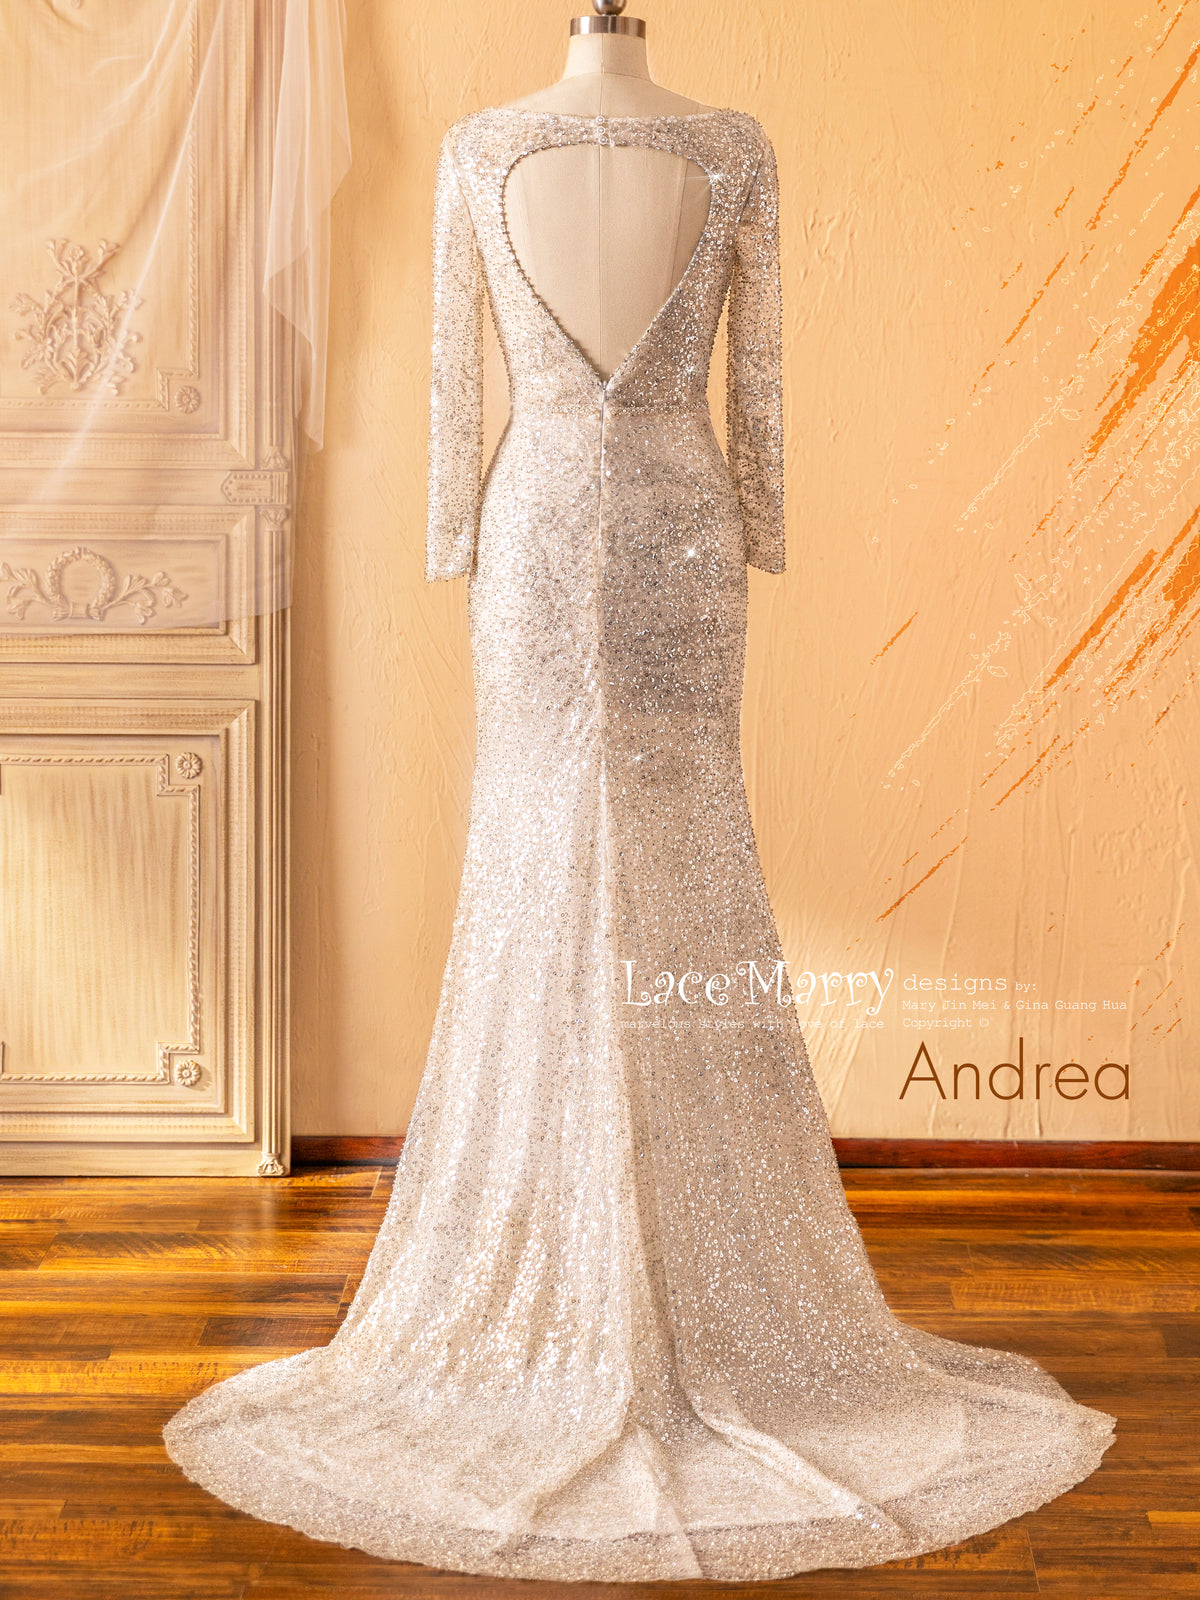 ANDREA / Long Sleeve Sparkling Sequin Wedding Dress